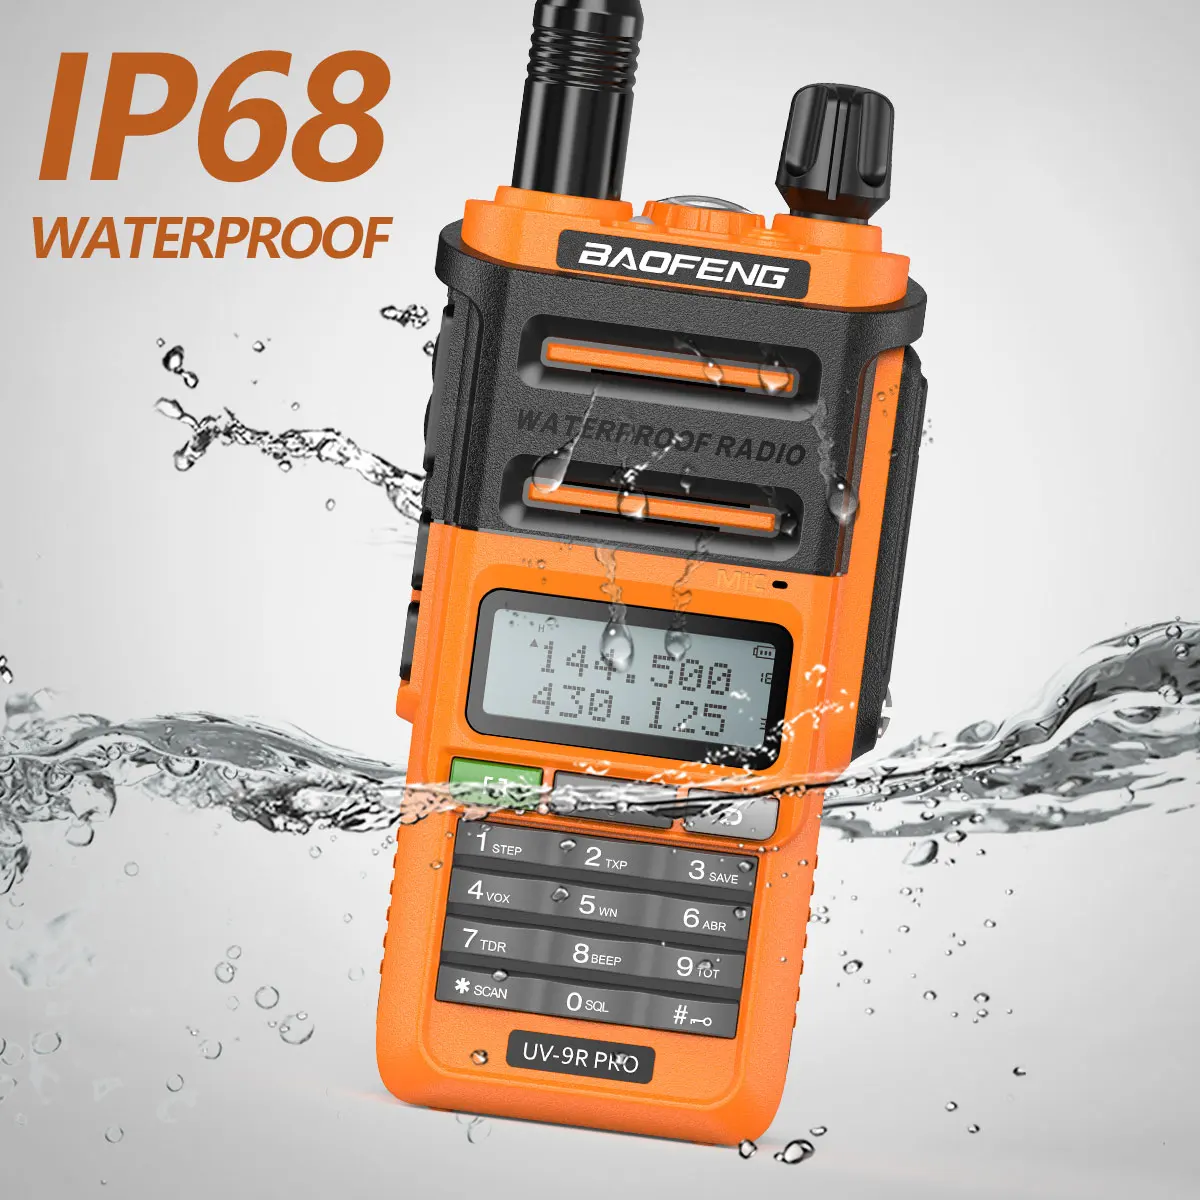 Baofeng UV-9R PRO Waterproof IP68 Dual Band 136-174/400-520MHz радиоприемник улучшенного стандарта